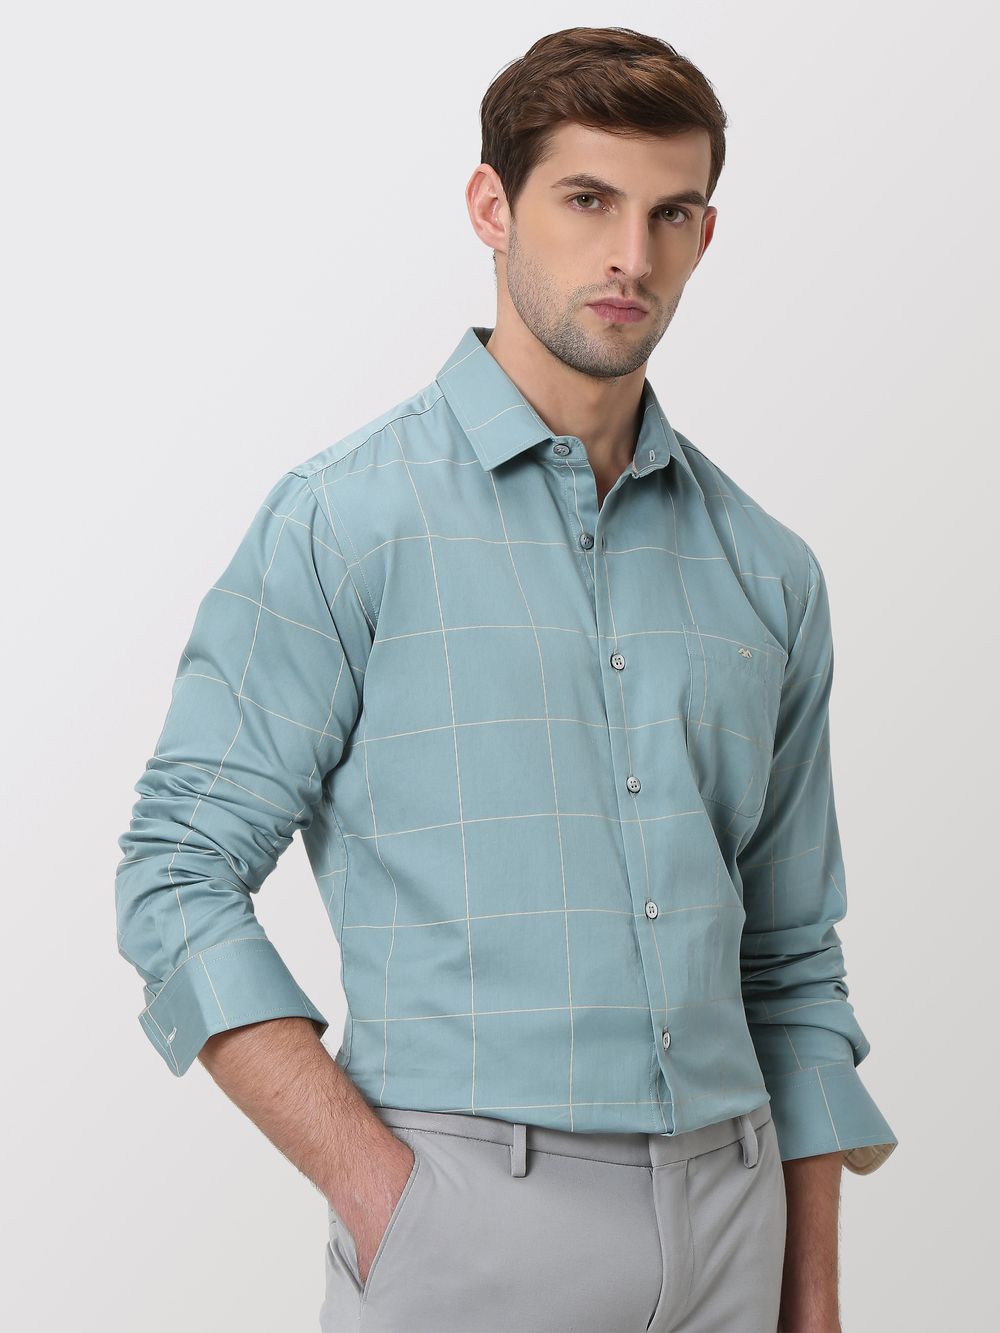 Blue & White Windowpane Check Slim Fit Casual Shirt